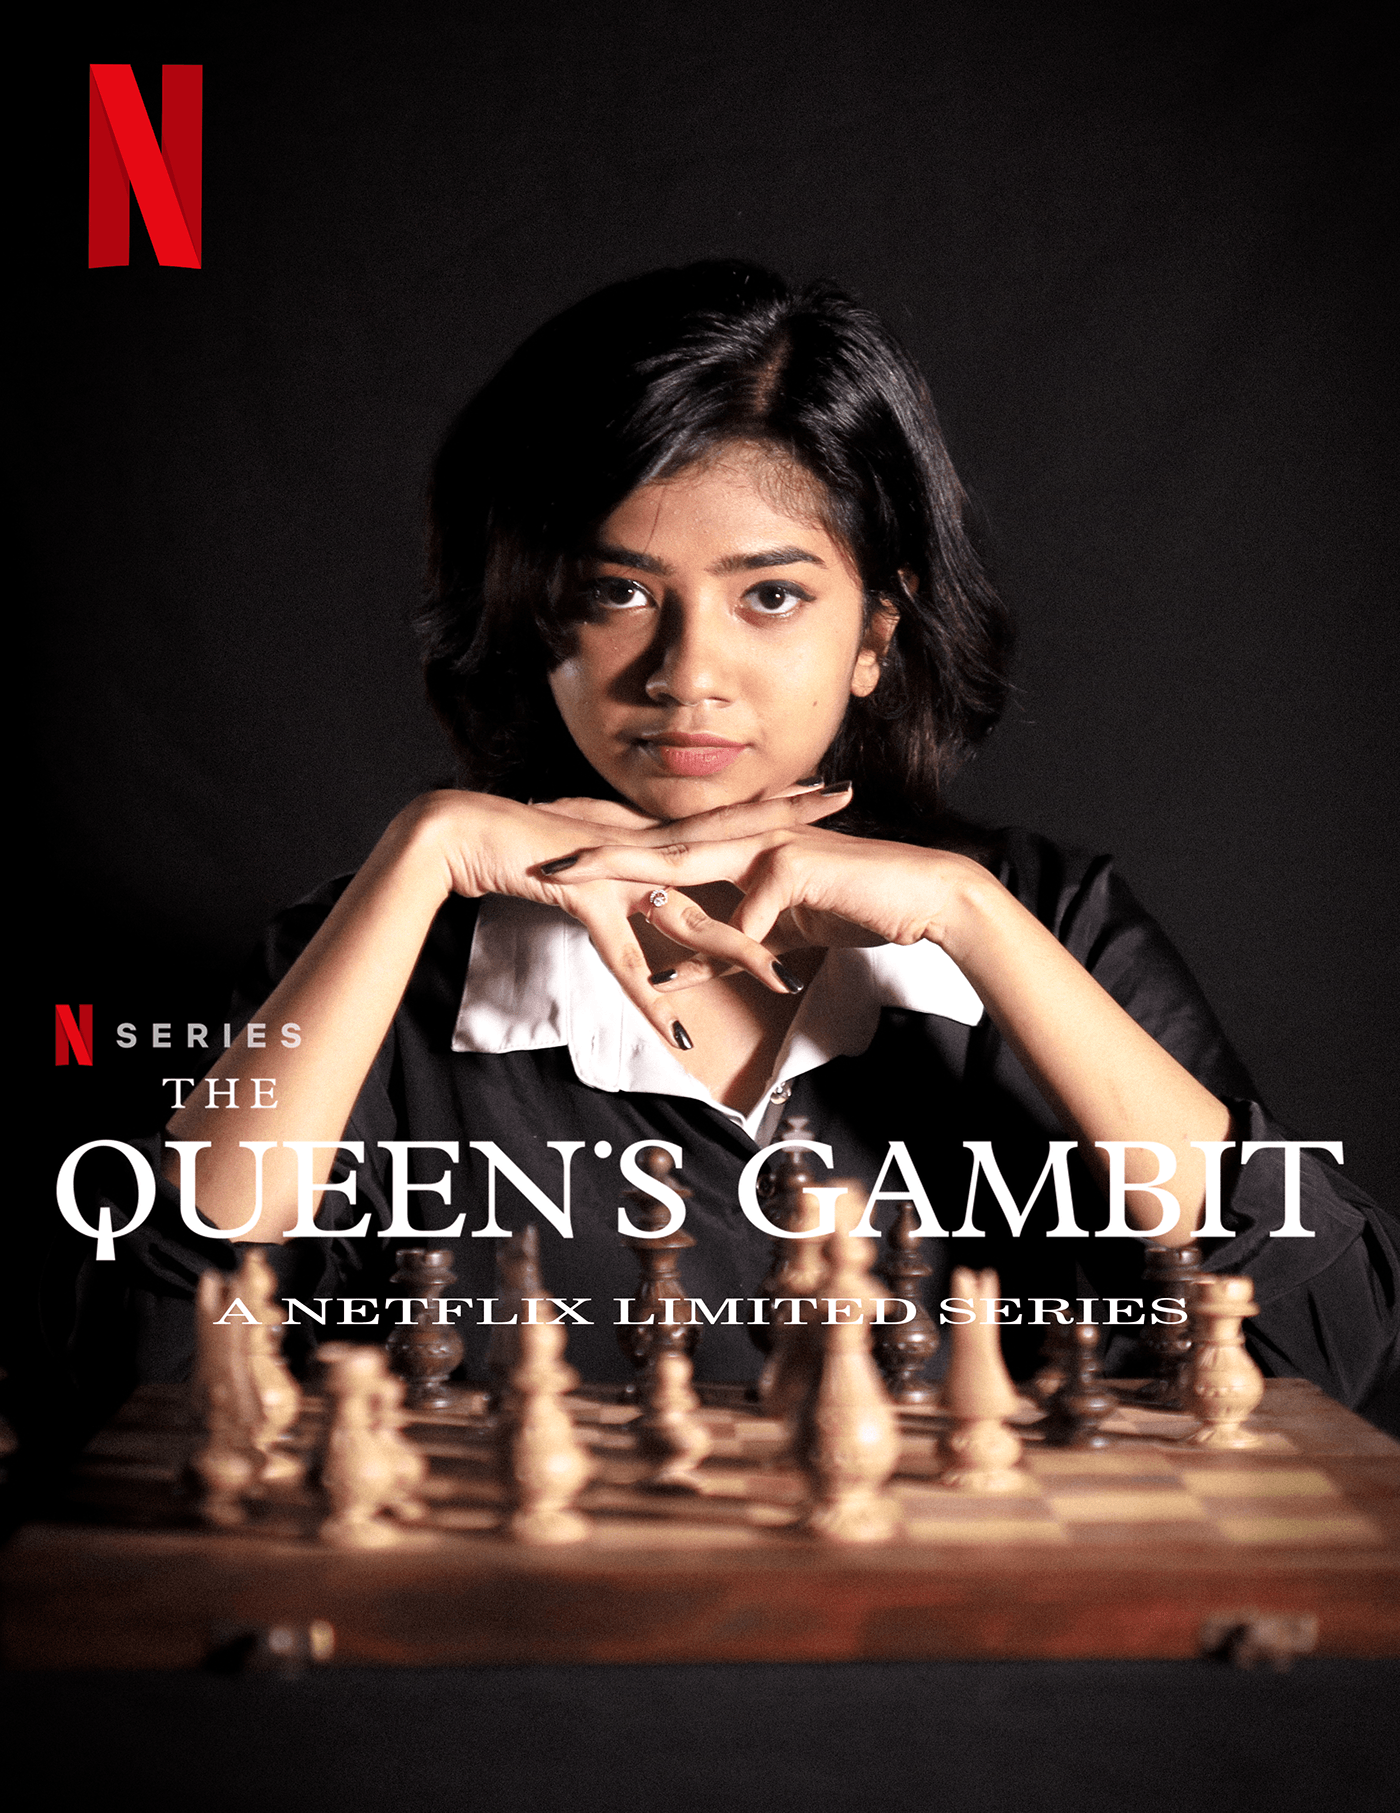 chess The Queen's Gambit Photography  photoshoot portrait photographer beauty model Fashion  Netflix